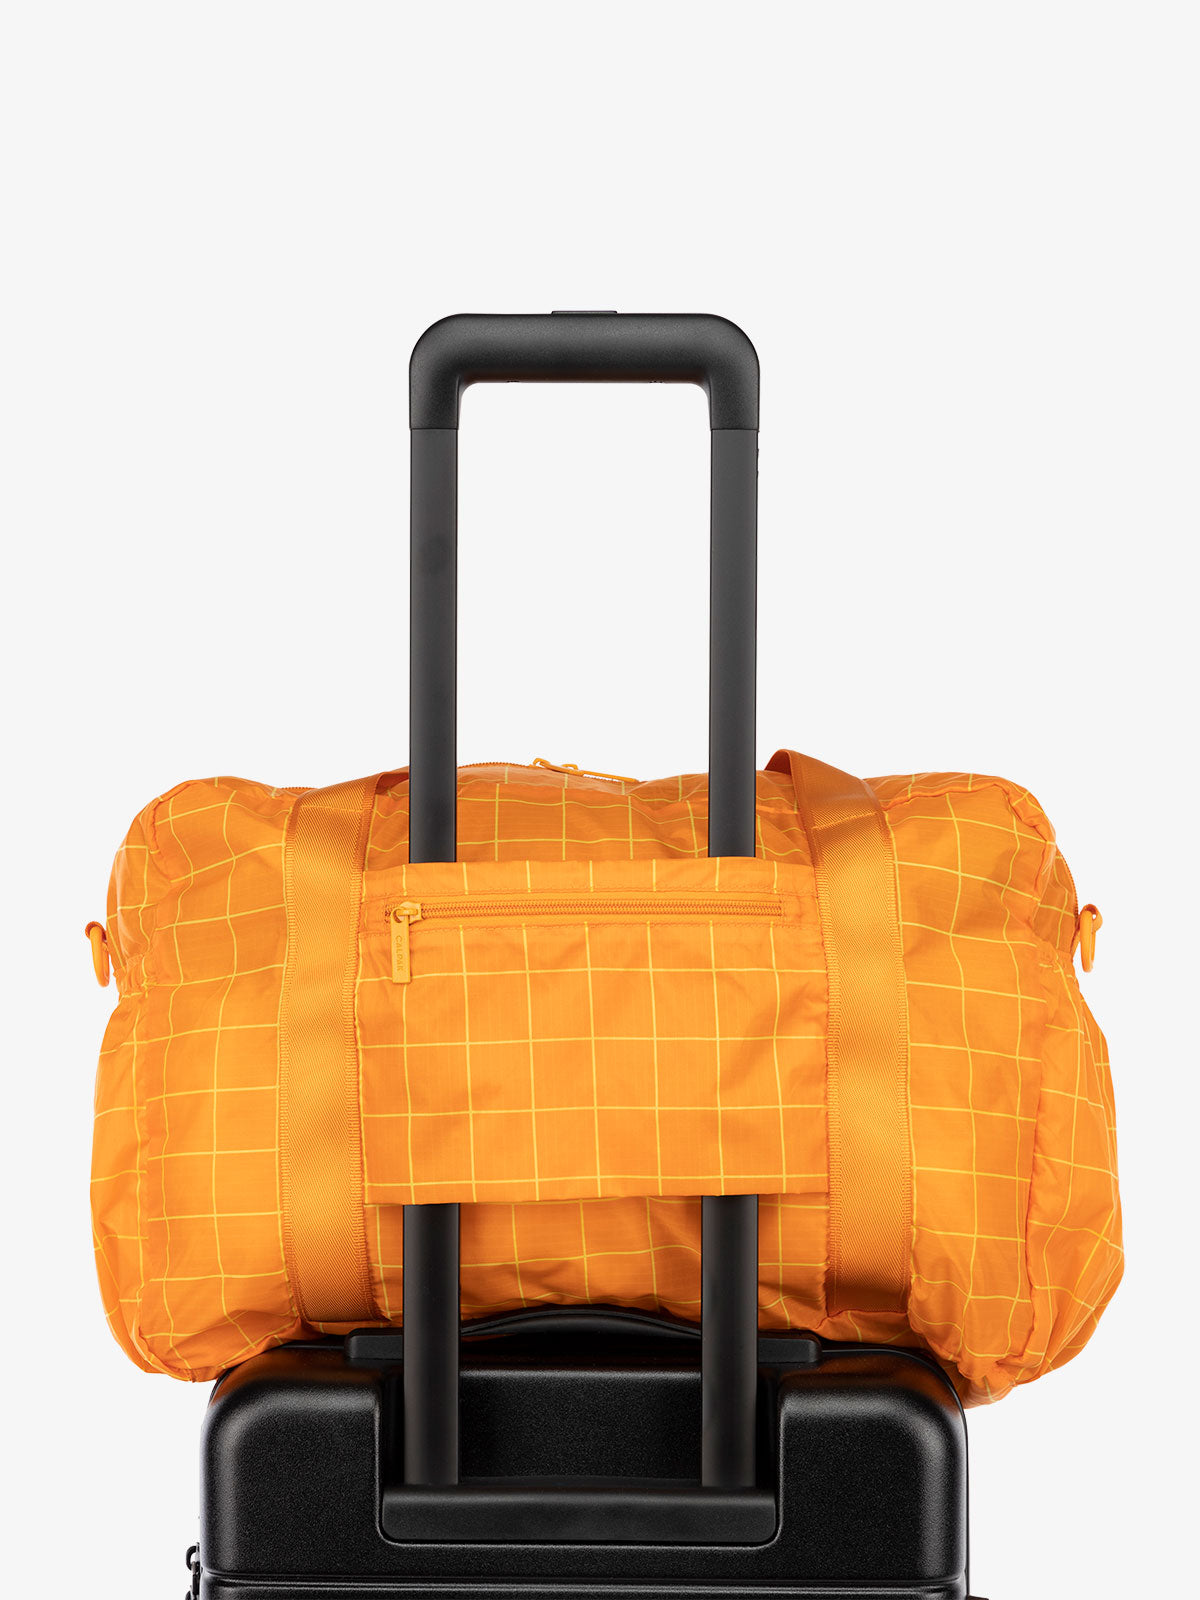 CALPAK Compakt nylon duffle bag with trolley sleeve in orange grid